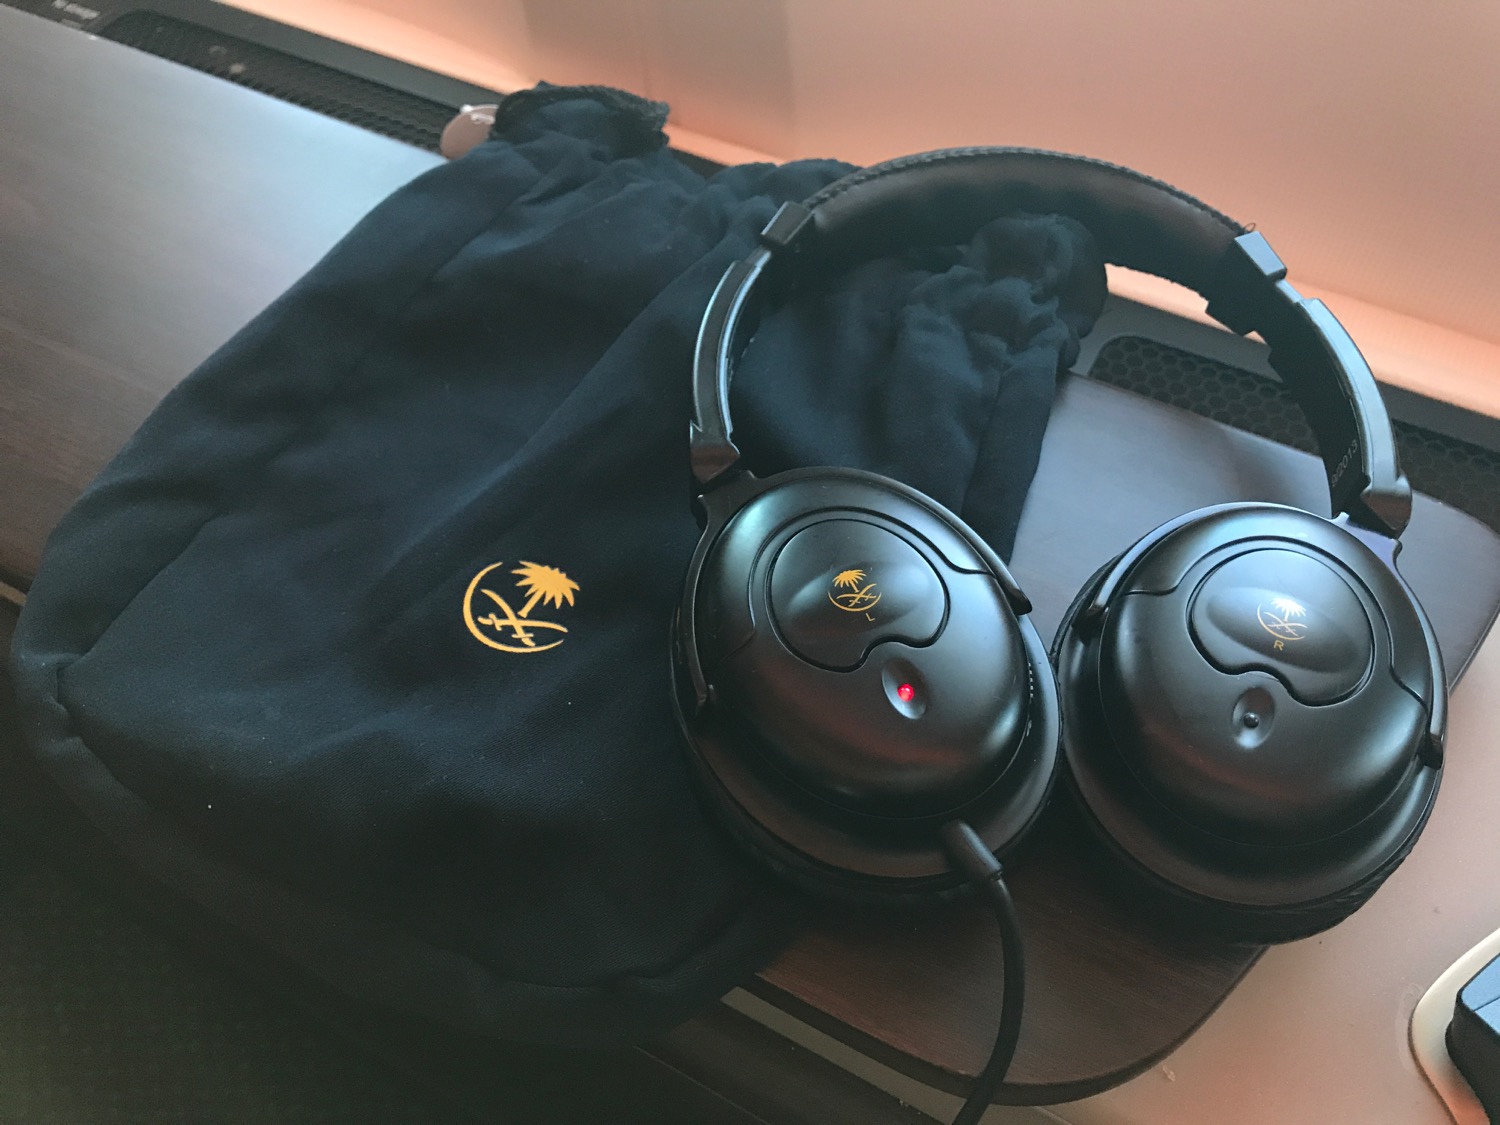 a pair of headphones on a black bag